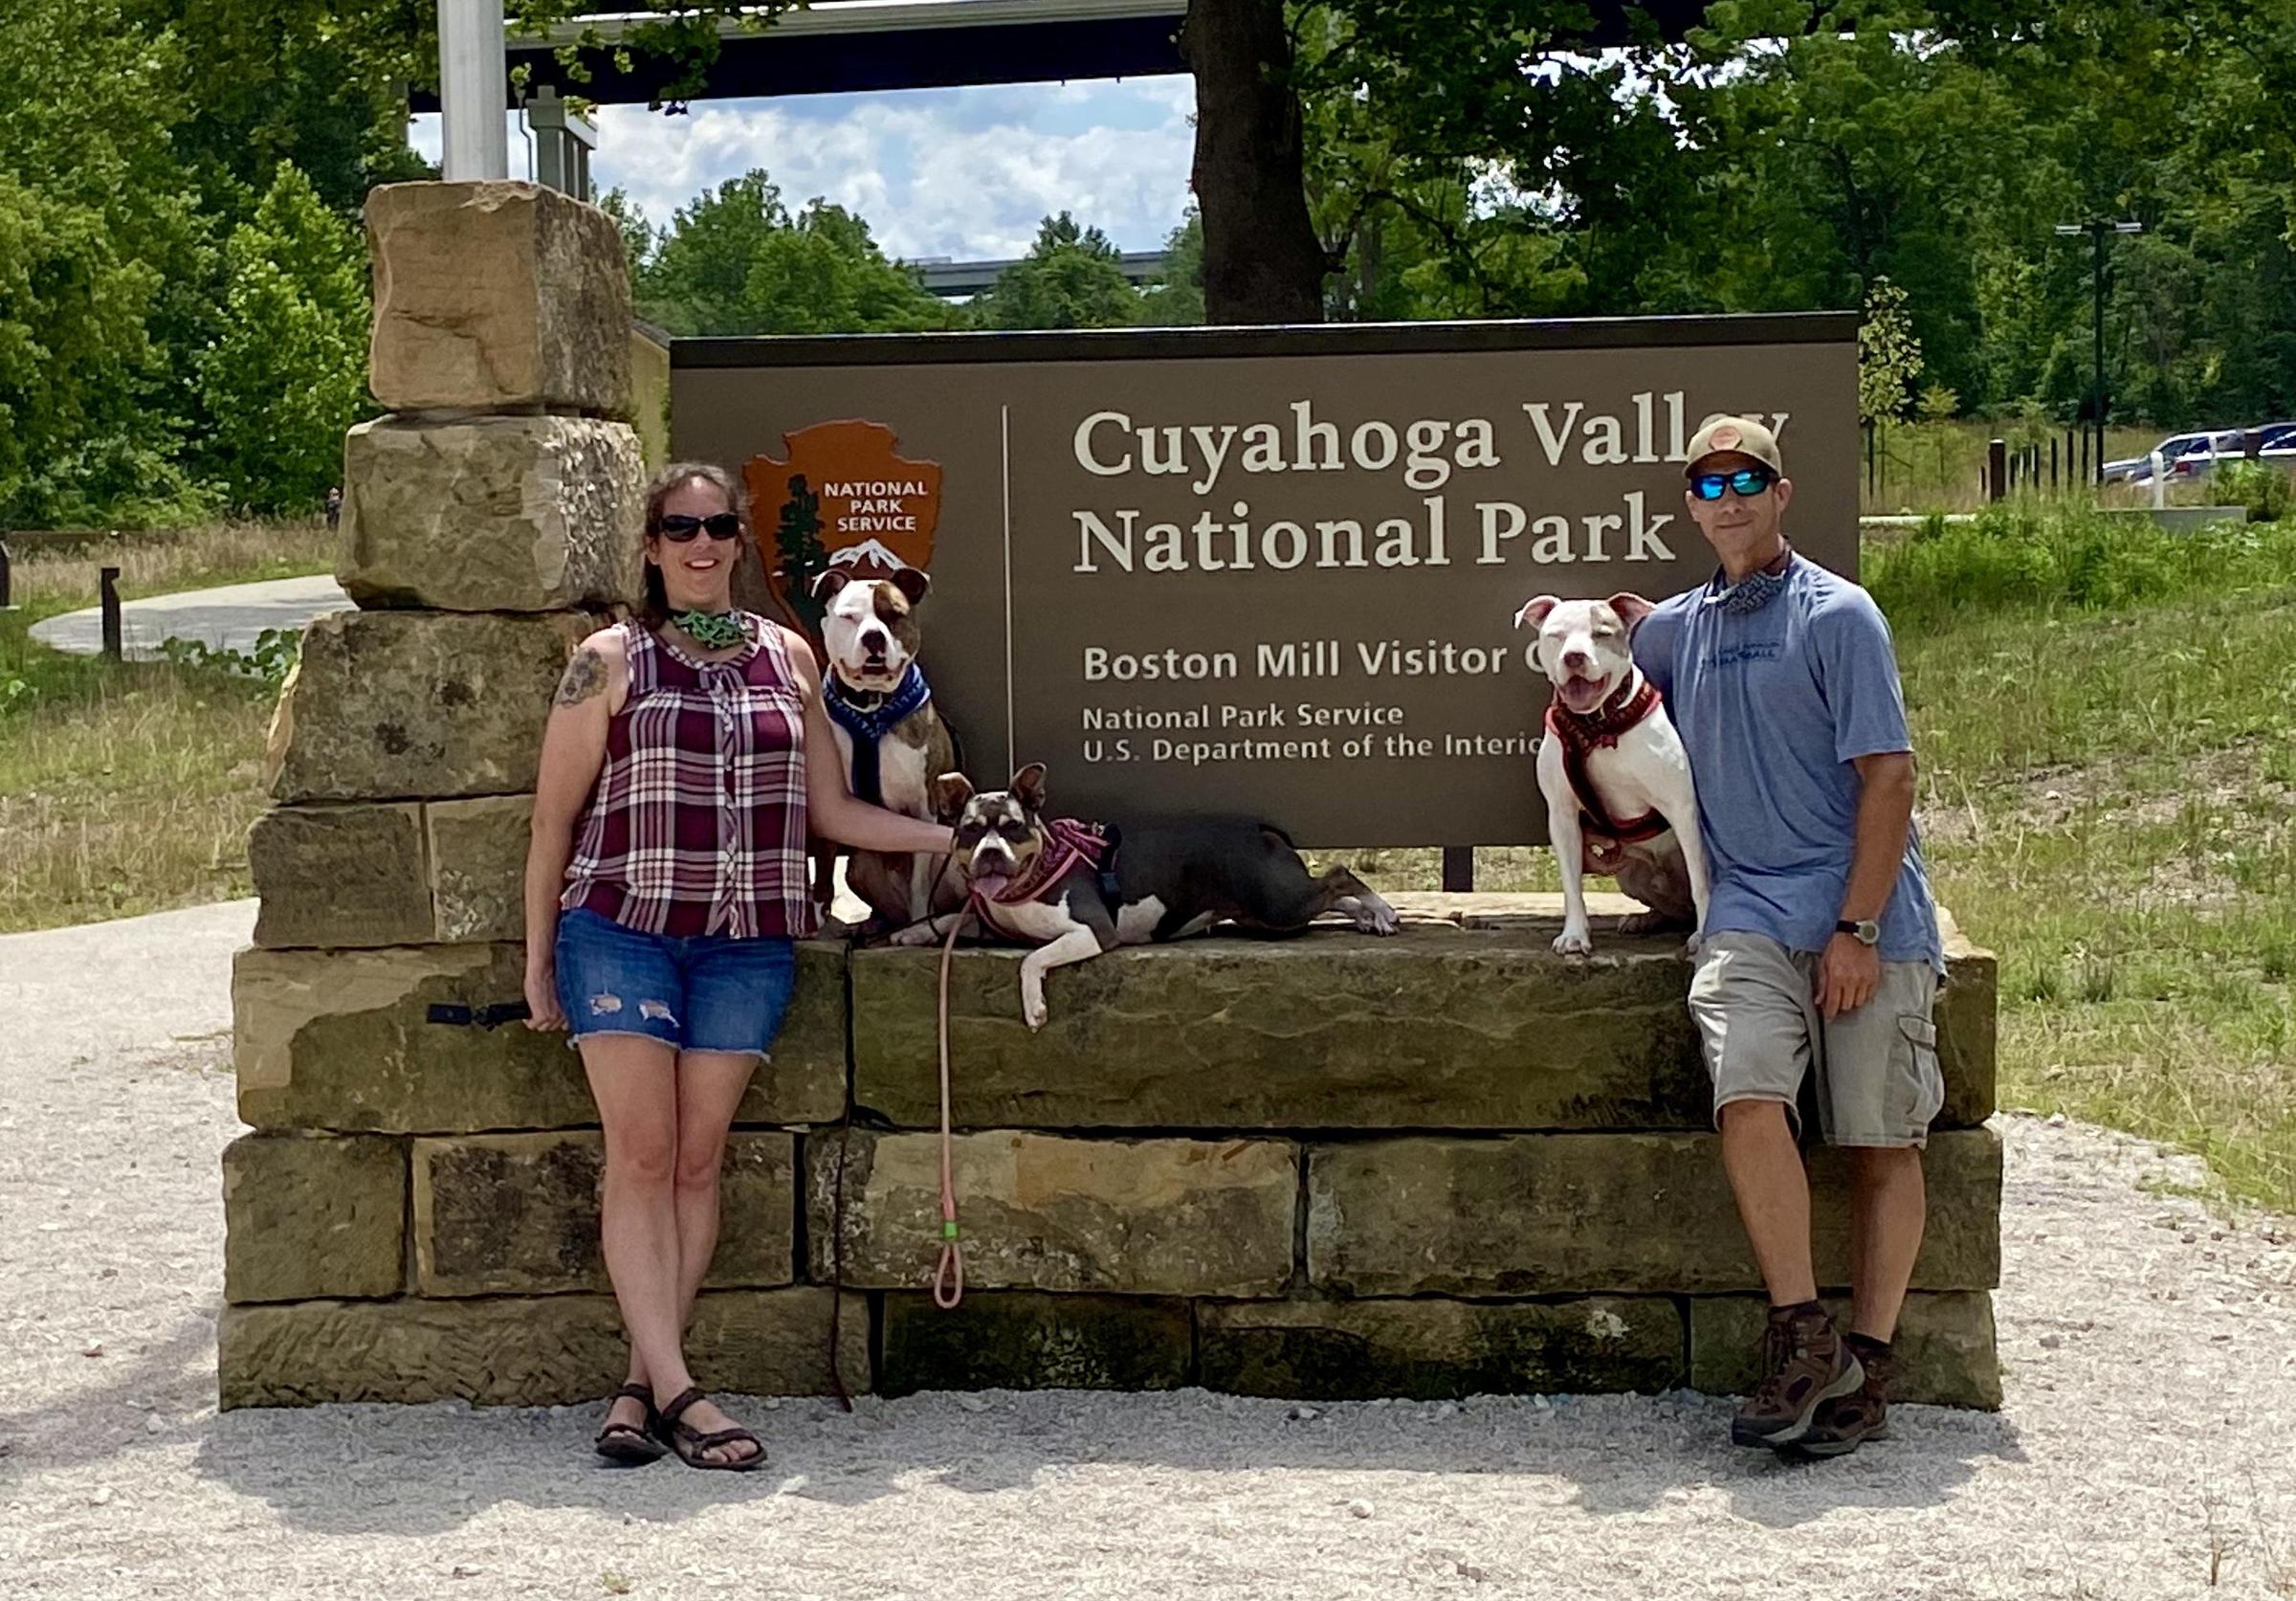 Pet Friendly Cuyahoga Valley National Park